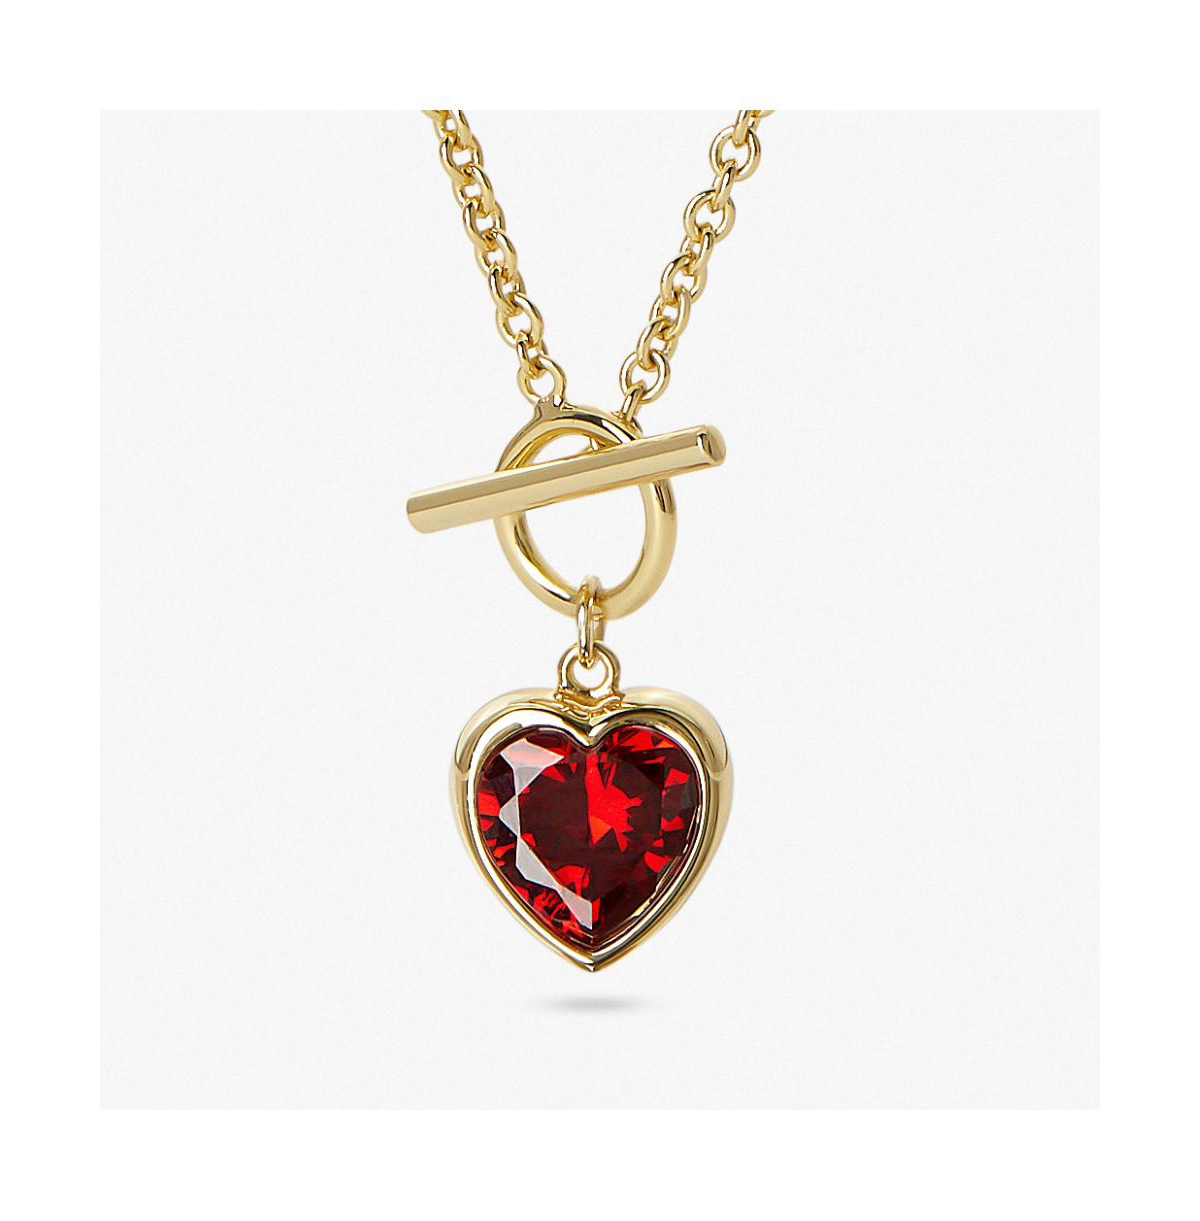 Gold Heart Necklace - Hana Lee Heart - Gold